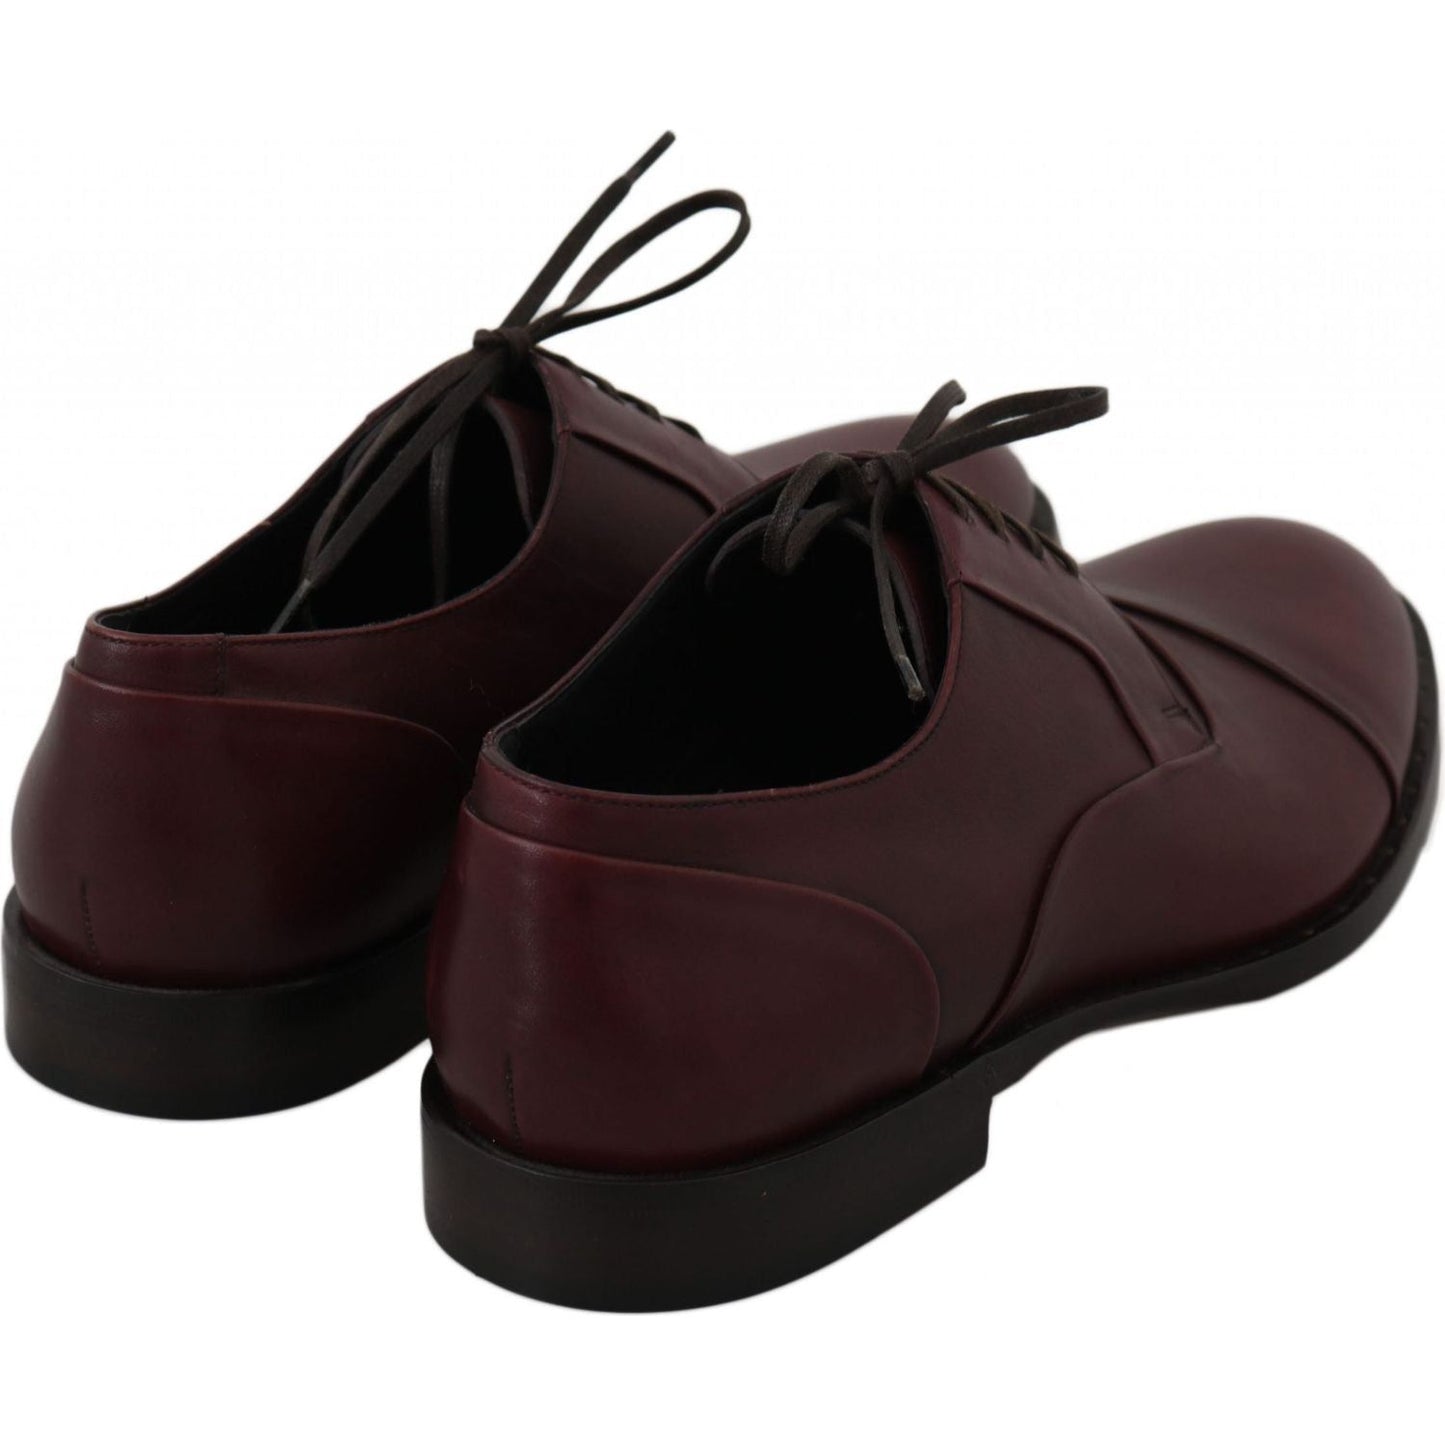 Dolce & Gabbana Elegant Bordeaux Leather Dress Shoes red-bordeaux-leather-derby-formal-shoes IMG_8401-scaled.jpg